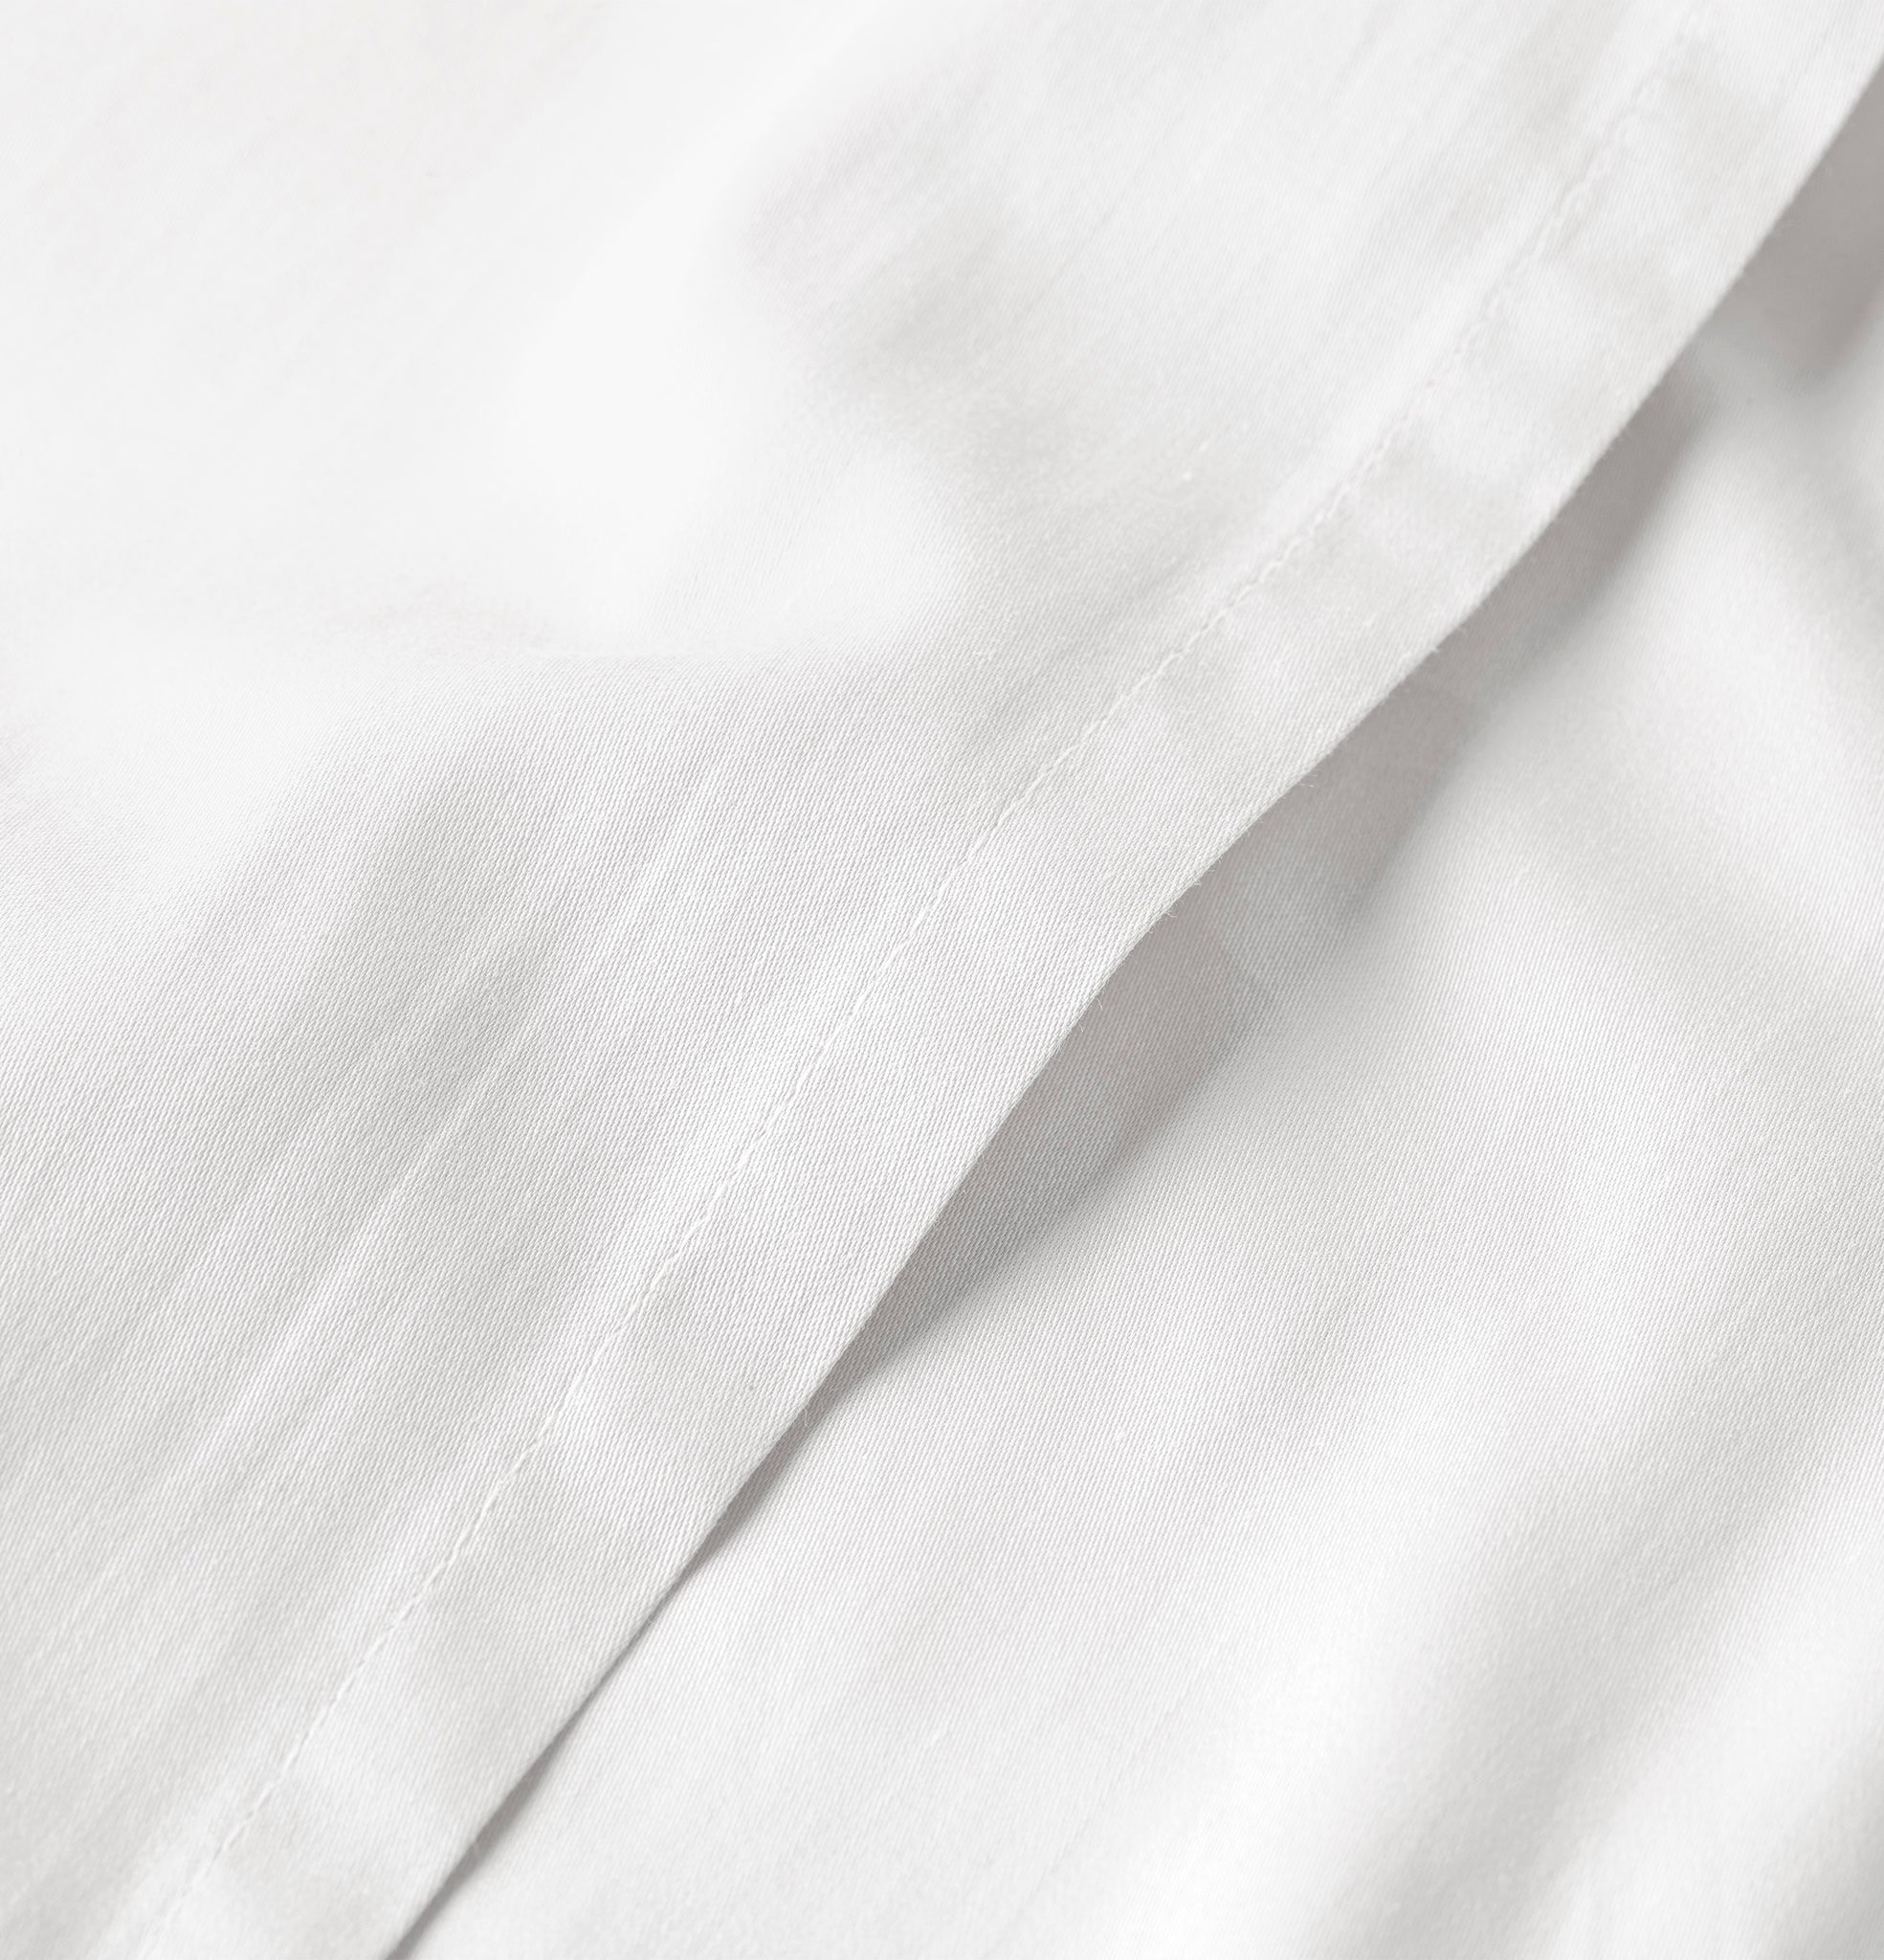 Midwinter white pillowcase detail